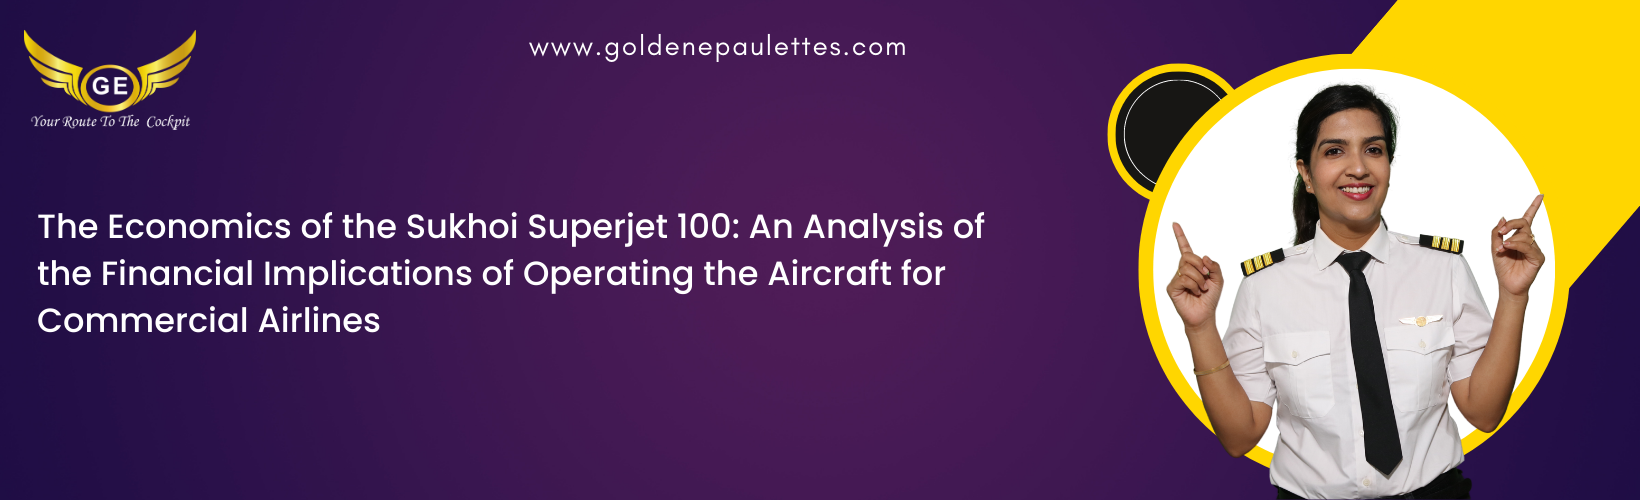 The Economics of the Sukhoi Superjet 100